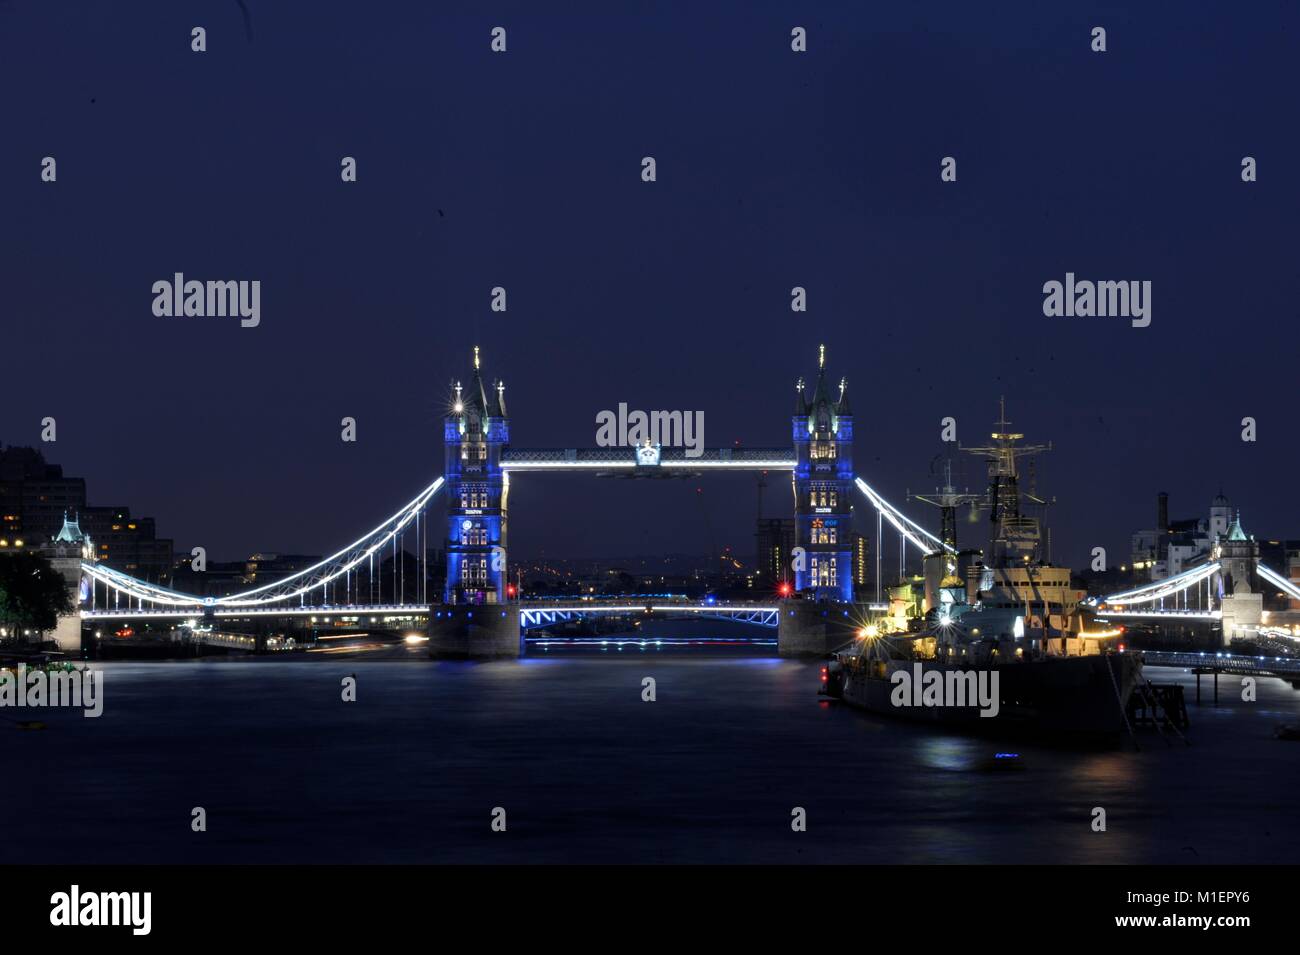 Tower Bridge London Stock Photo